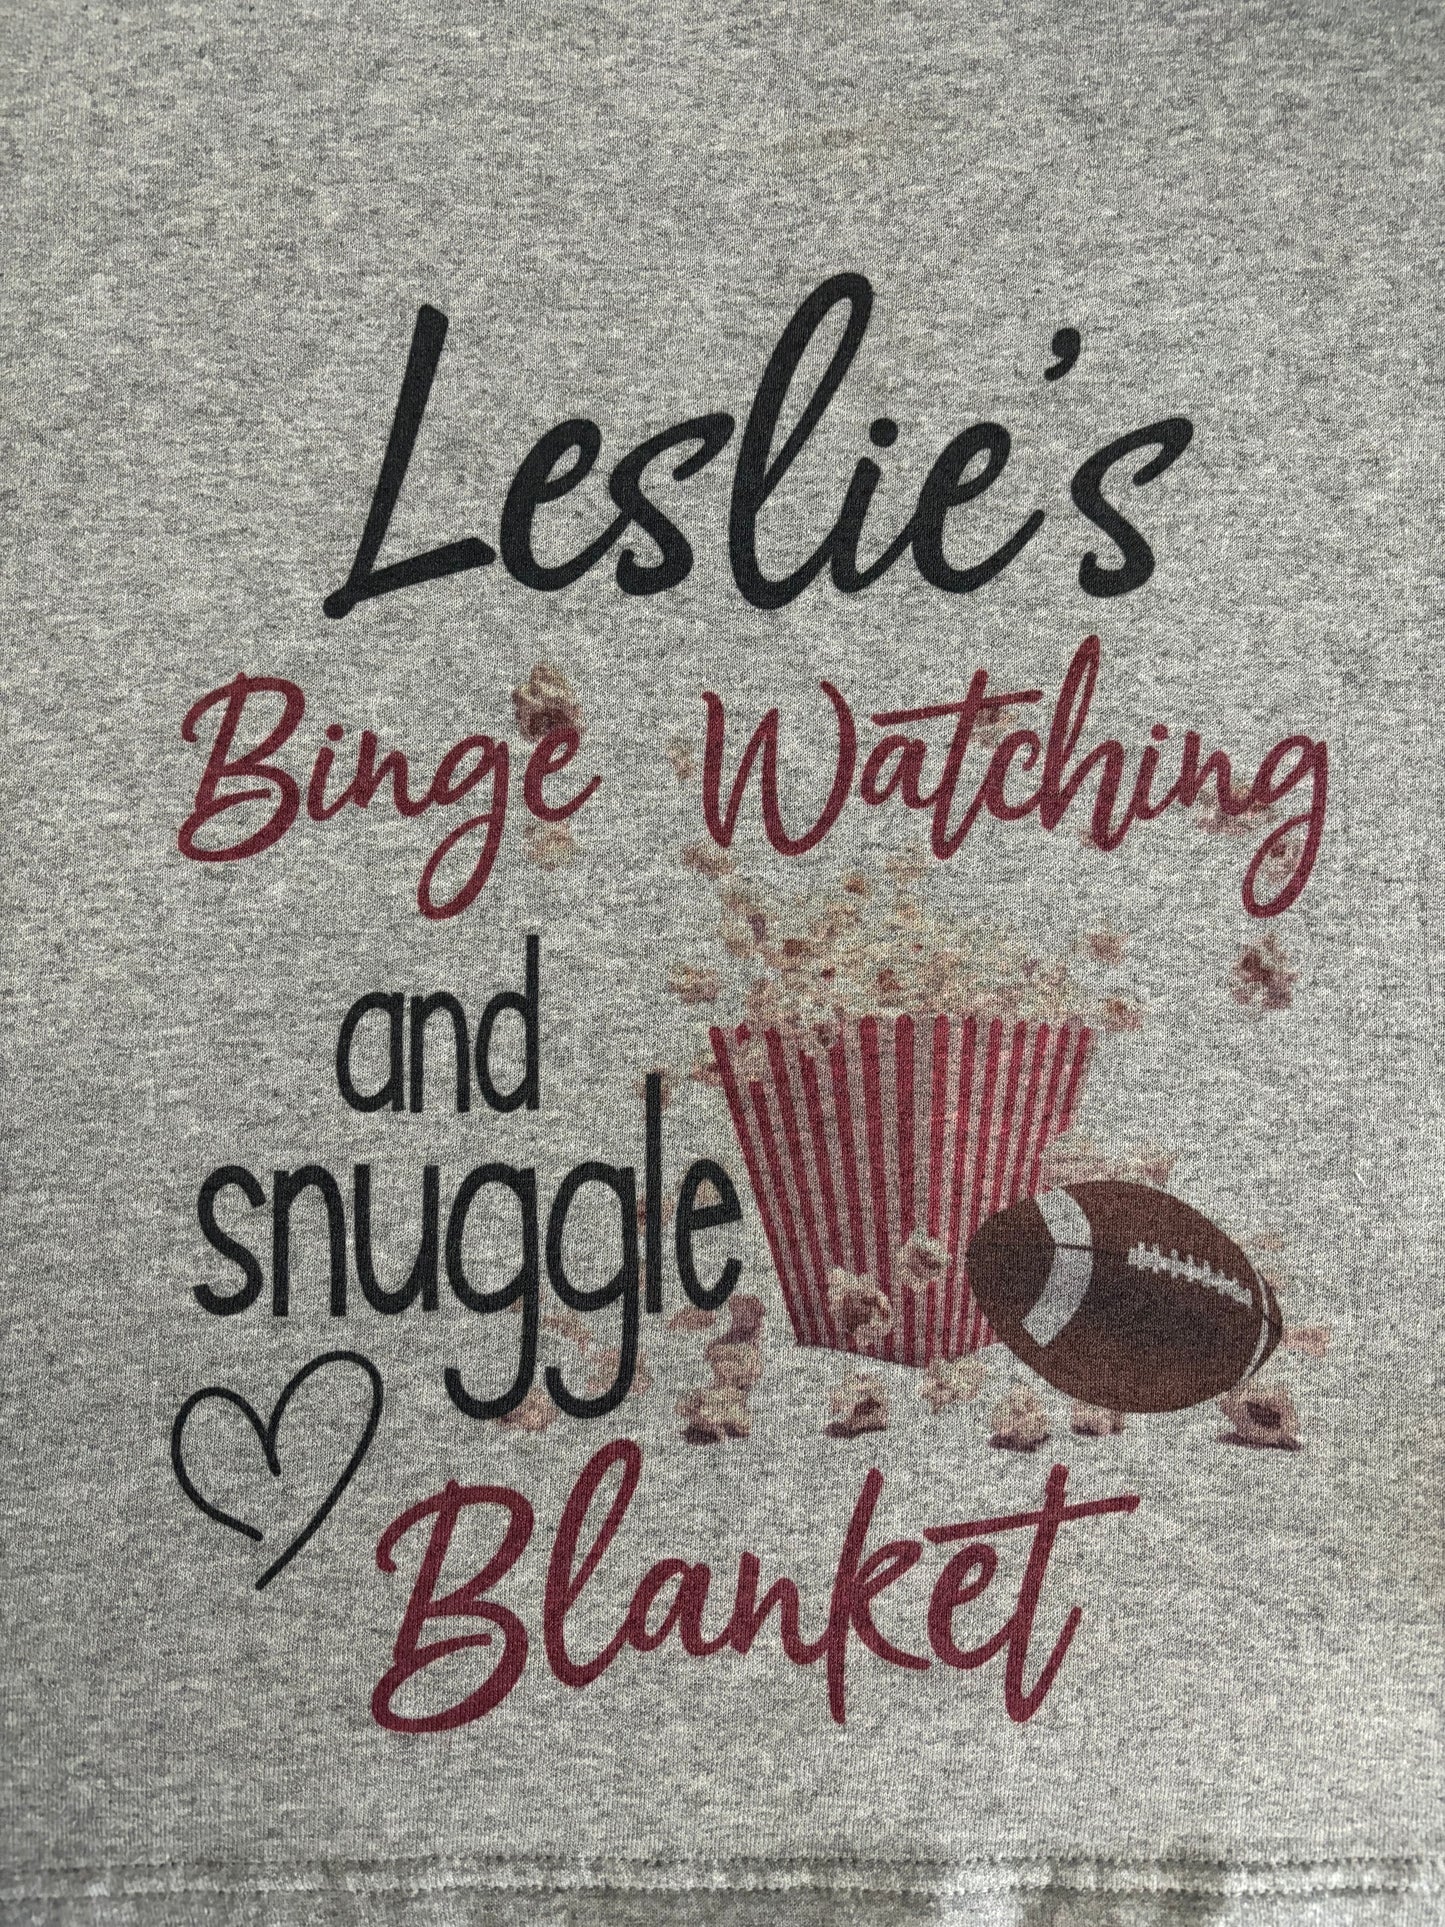 Binge Watching Movie Blanket Personalized Gift